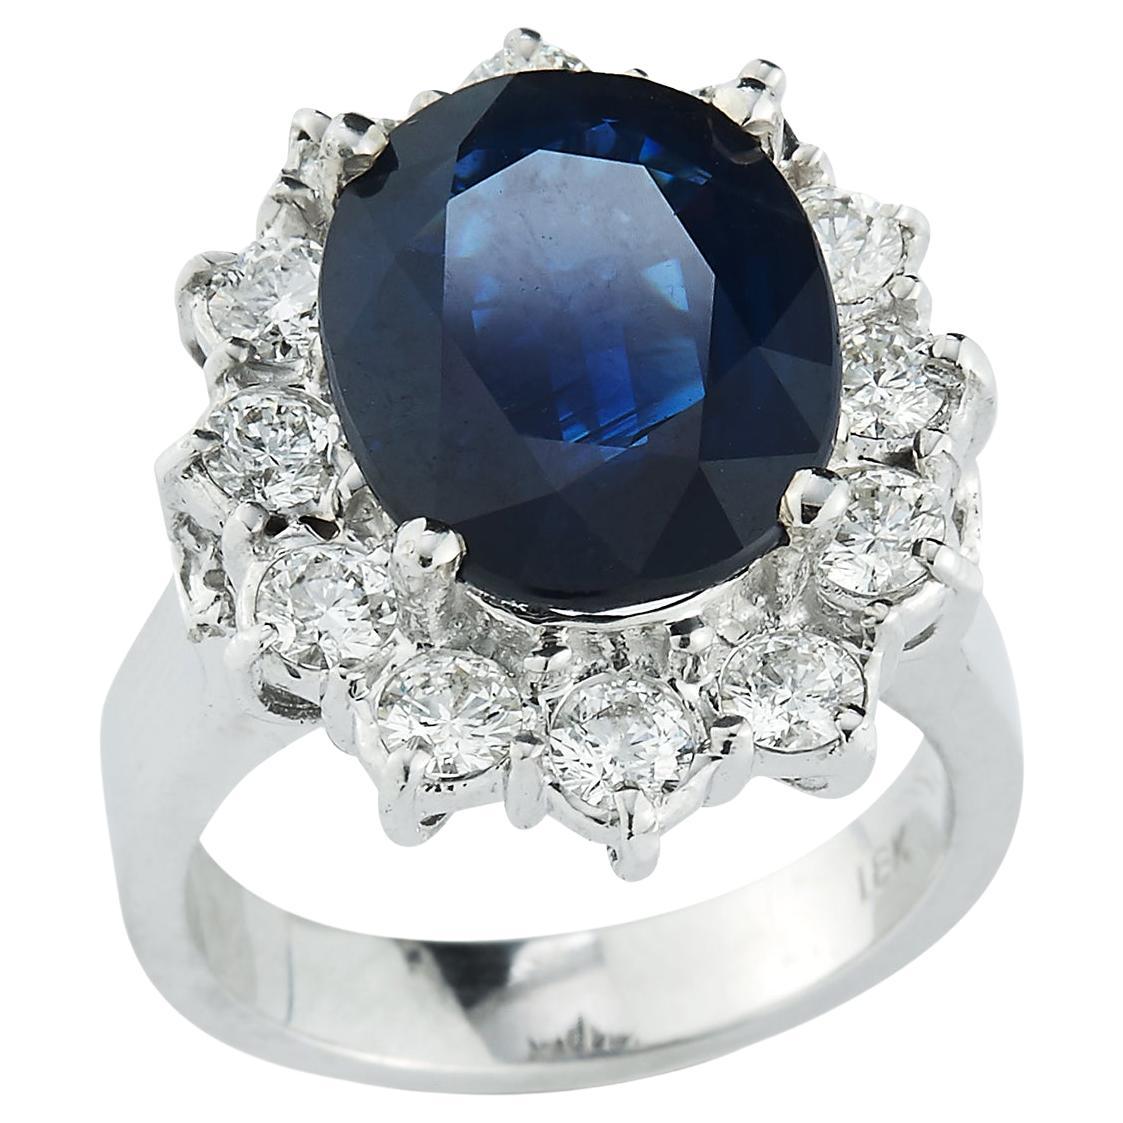 Saphir & Diamant Ring